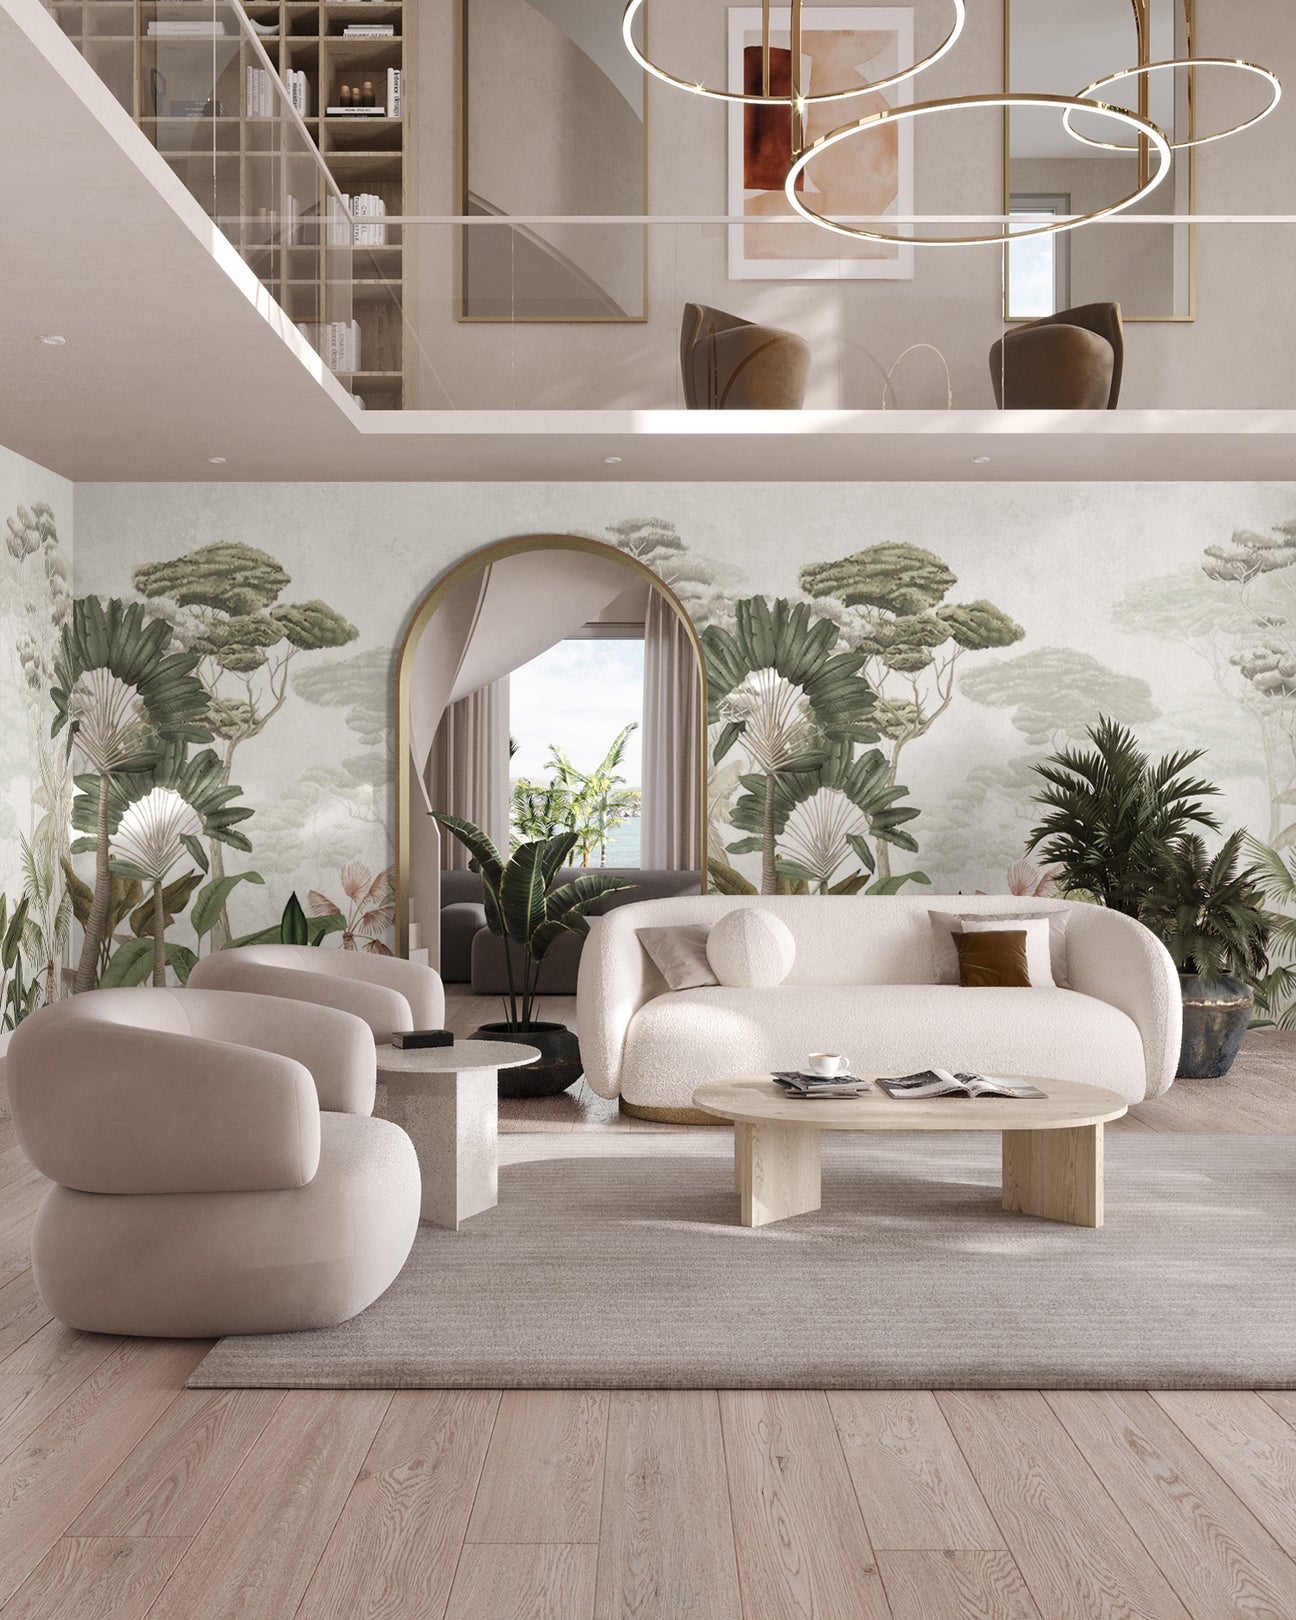 Tropical Botanical Contemporary Interior Design Wallpaper in living room